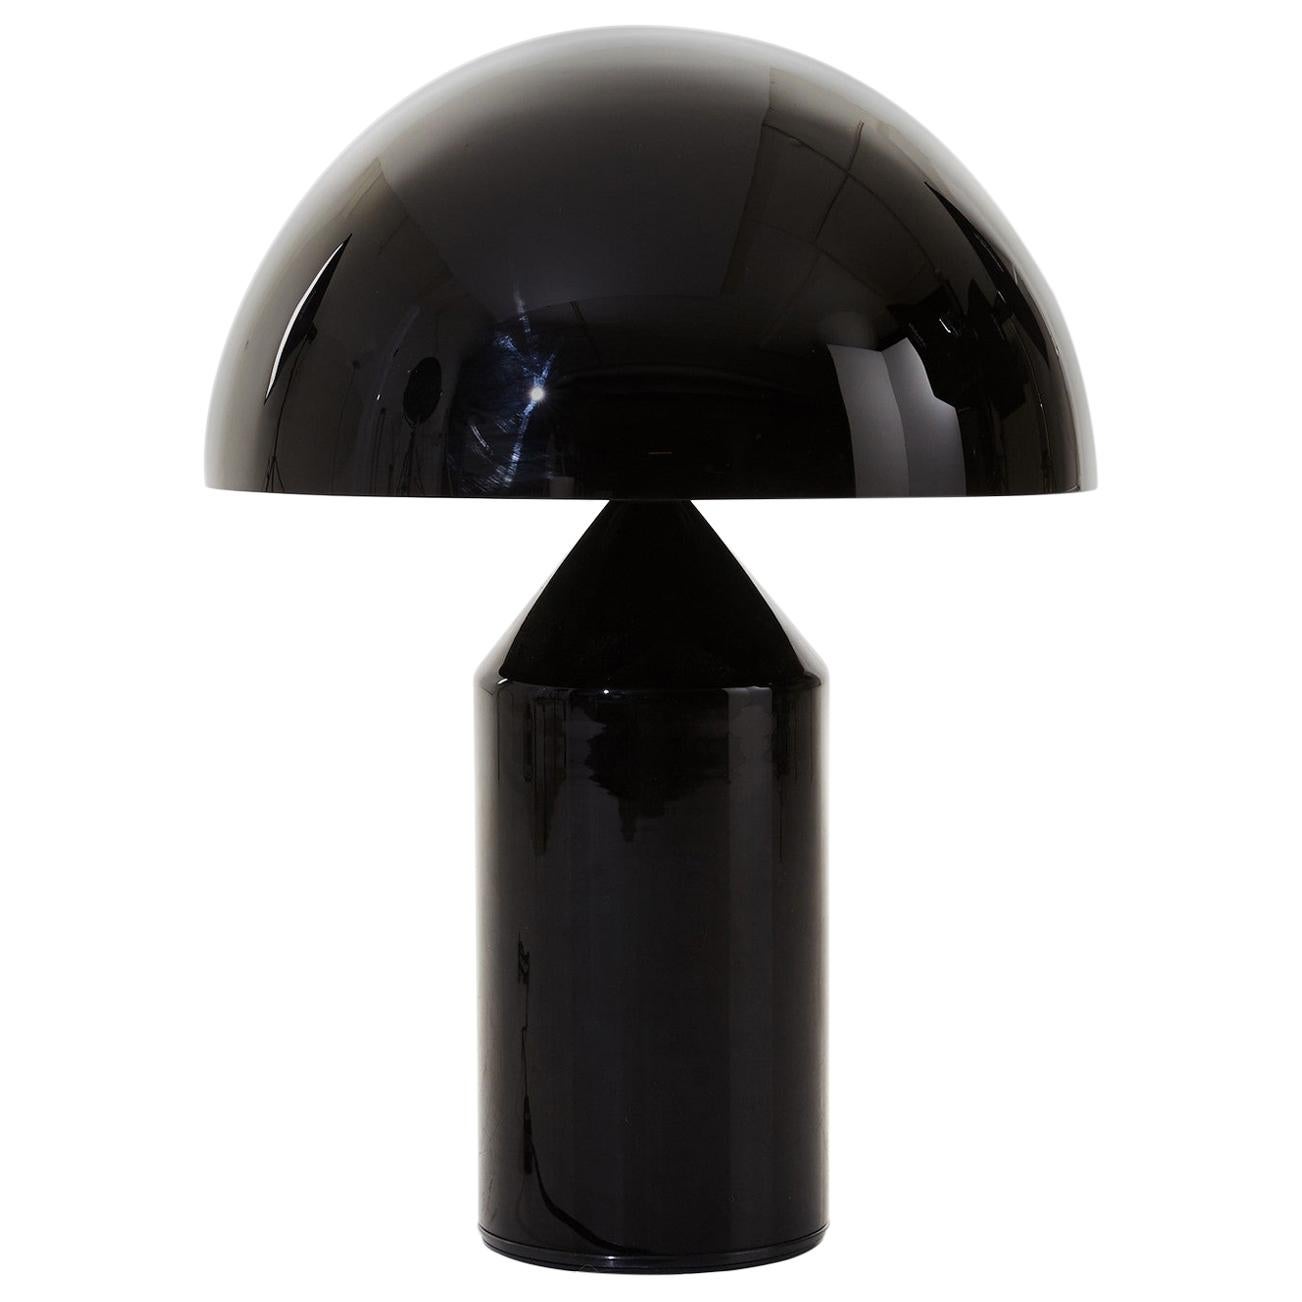 Metal Black/White Table Lamp Atollo 233 by Vico Magistretti for Oluce